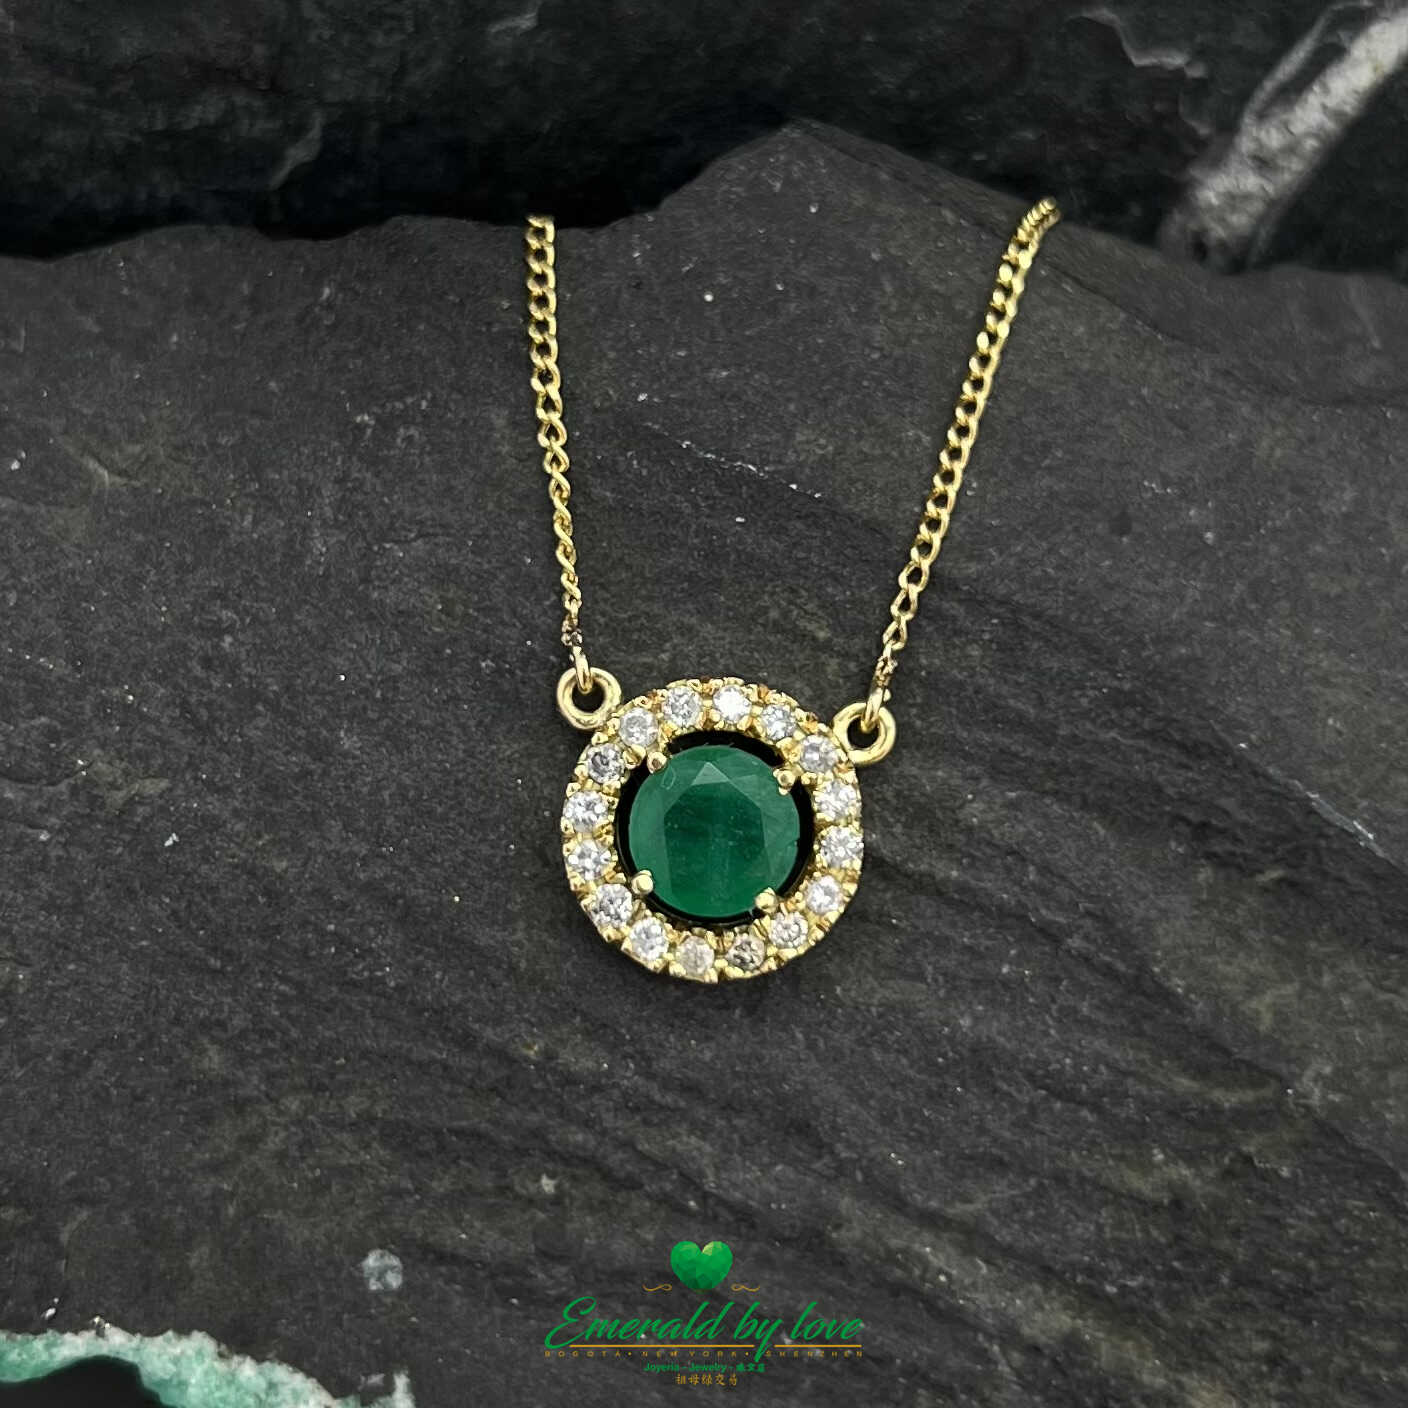 18K Yellow Gold Pendant with 1.10 ct Round Emerald and 16 Surrounding Diamonds